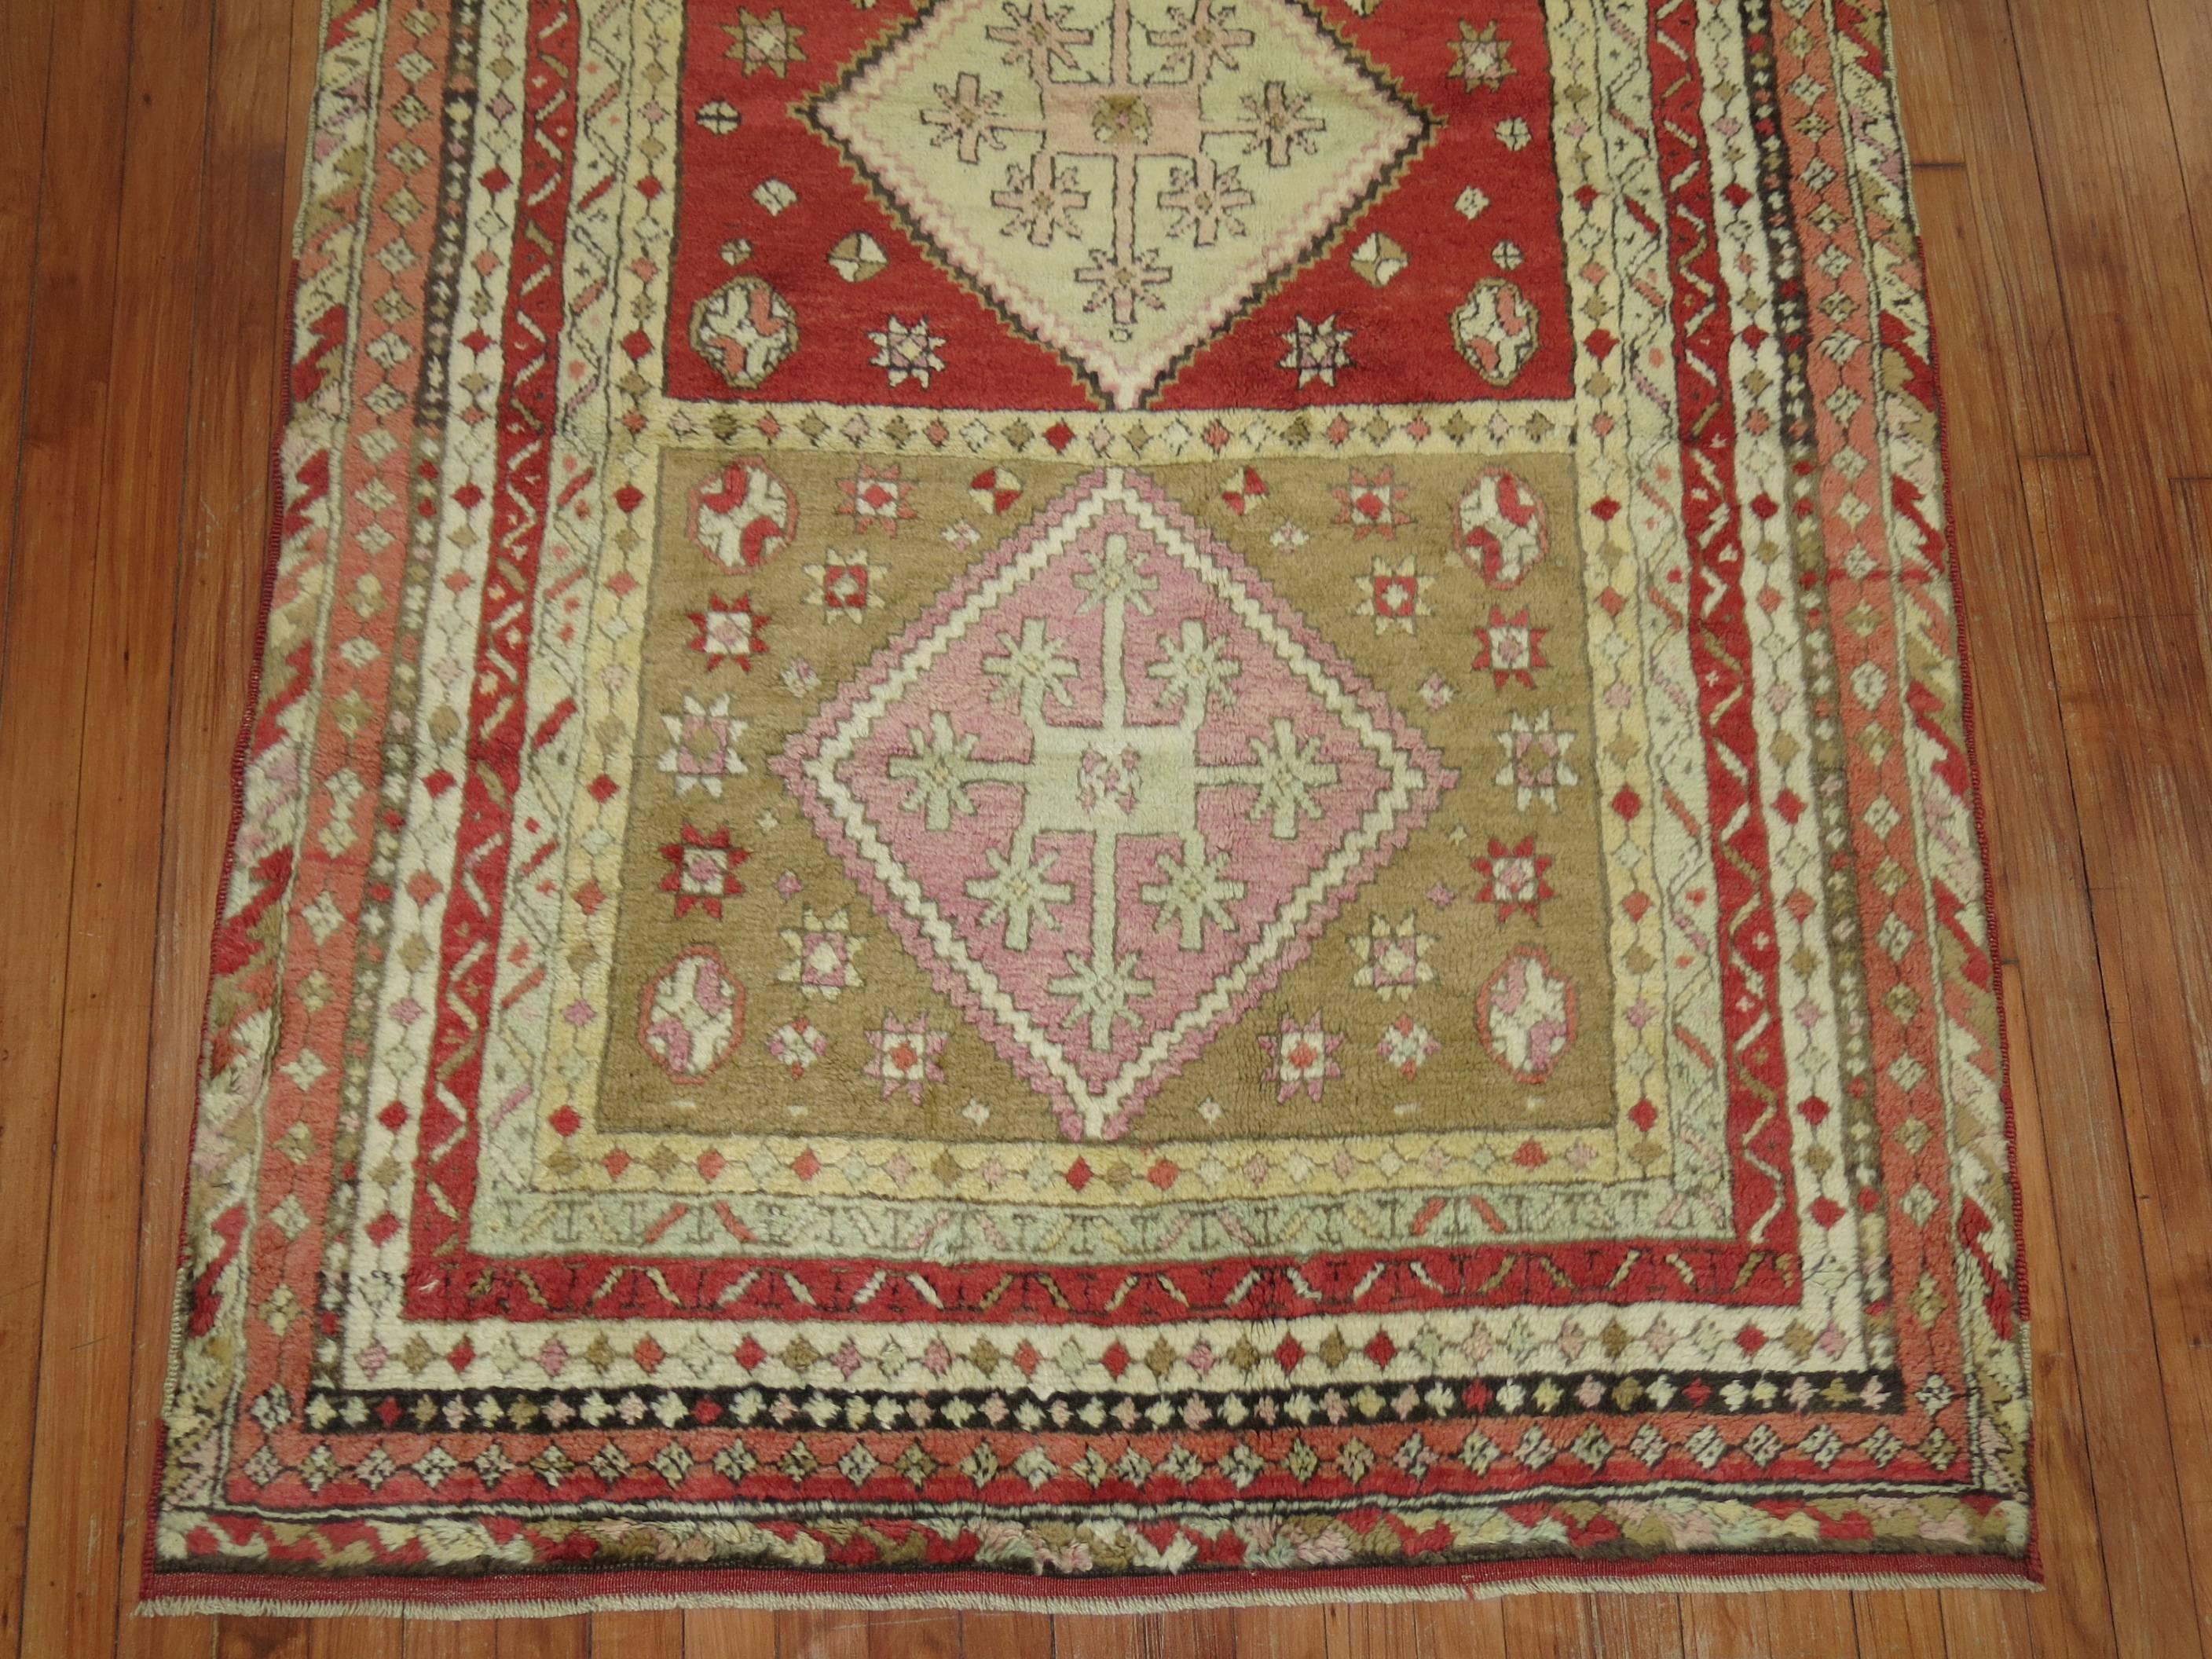 Full Pile Turkish Sivas rug with intricate geometric design.

Size: 4' x 7'9